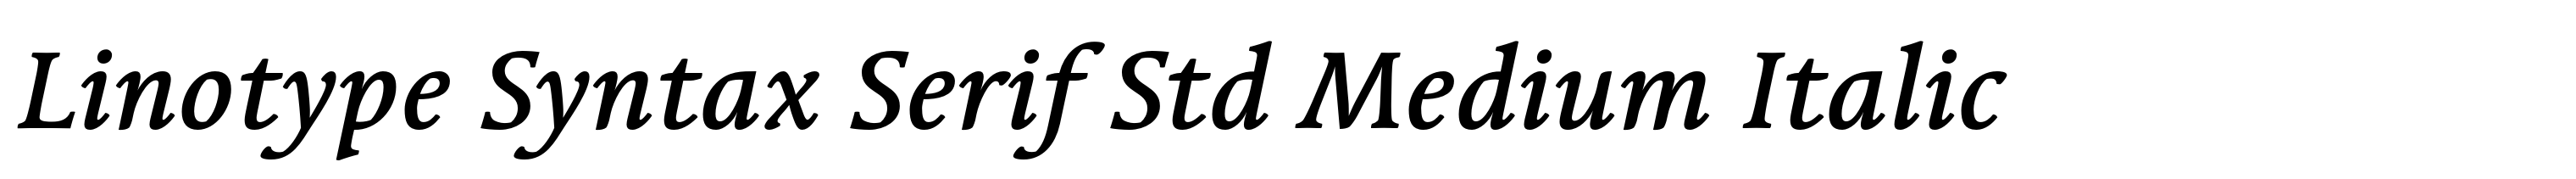 Linotype Syntax Serif Std Medium Italic